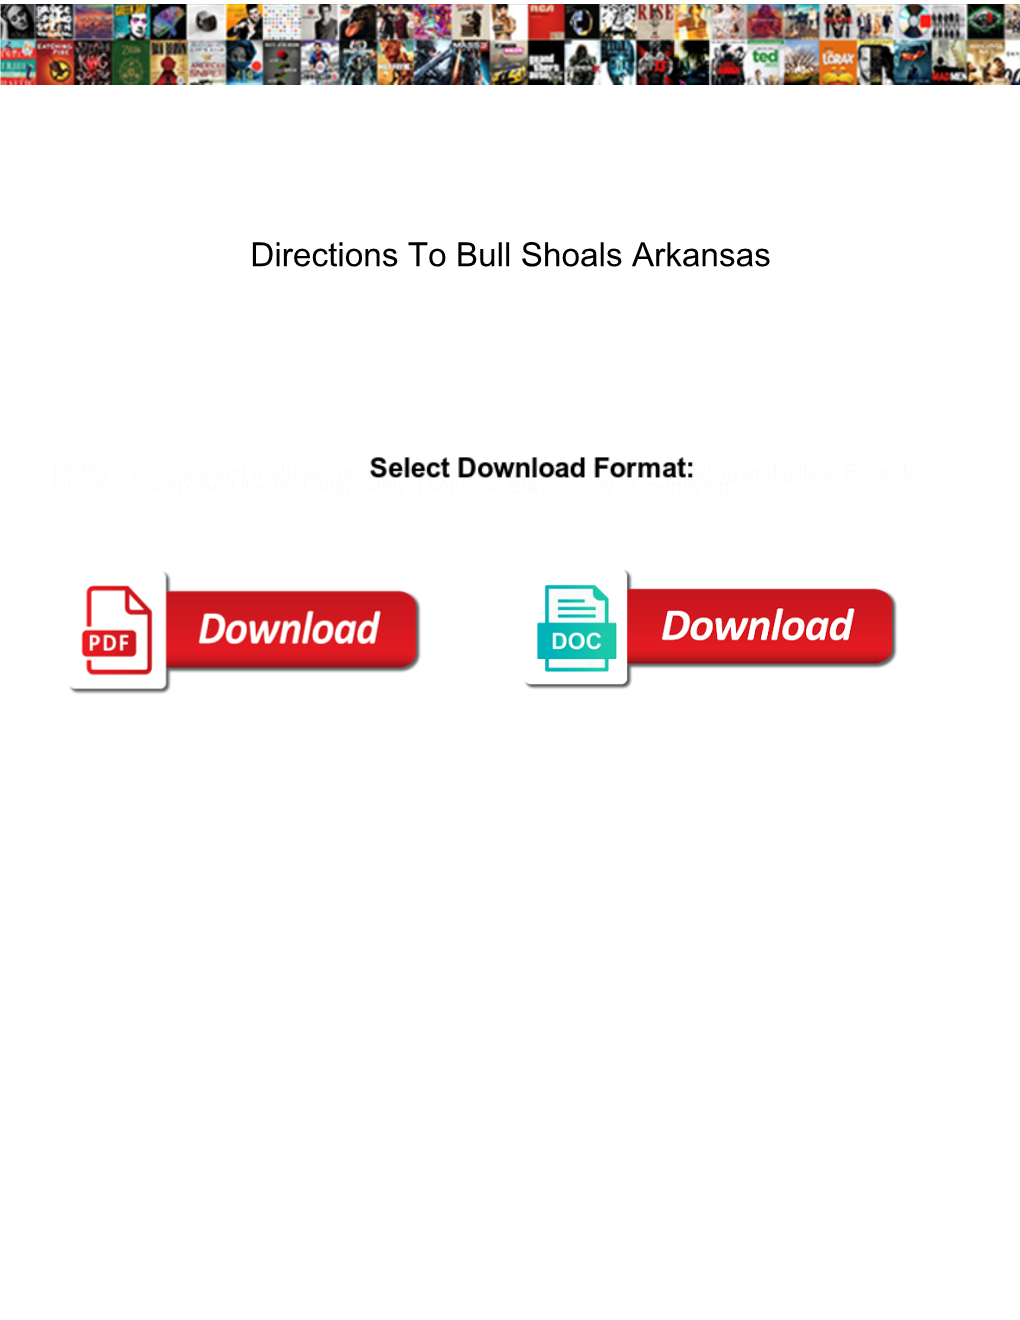 Directions to Bull Shoals Arkansas